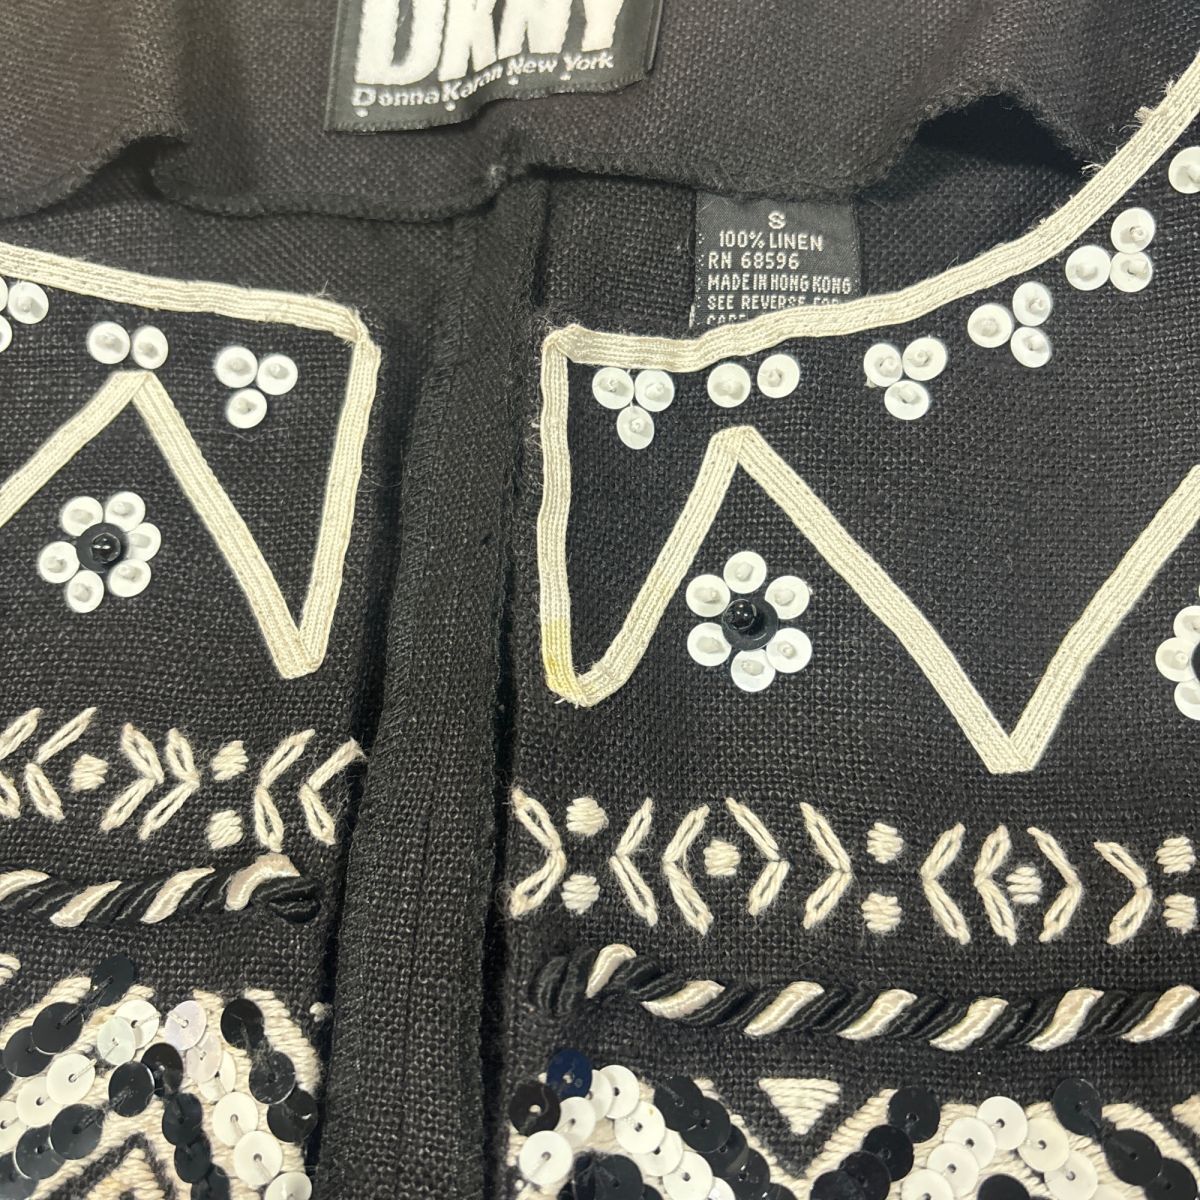 DKNY Donna Karan New York linen fringe spangled embroidery long sleeve cardigan tops lady's black black size S*MC67